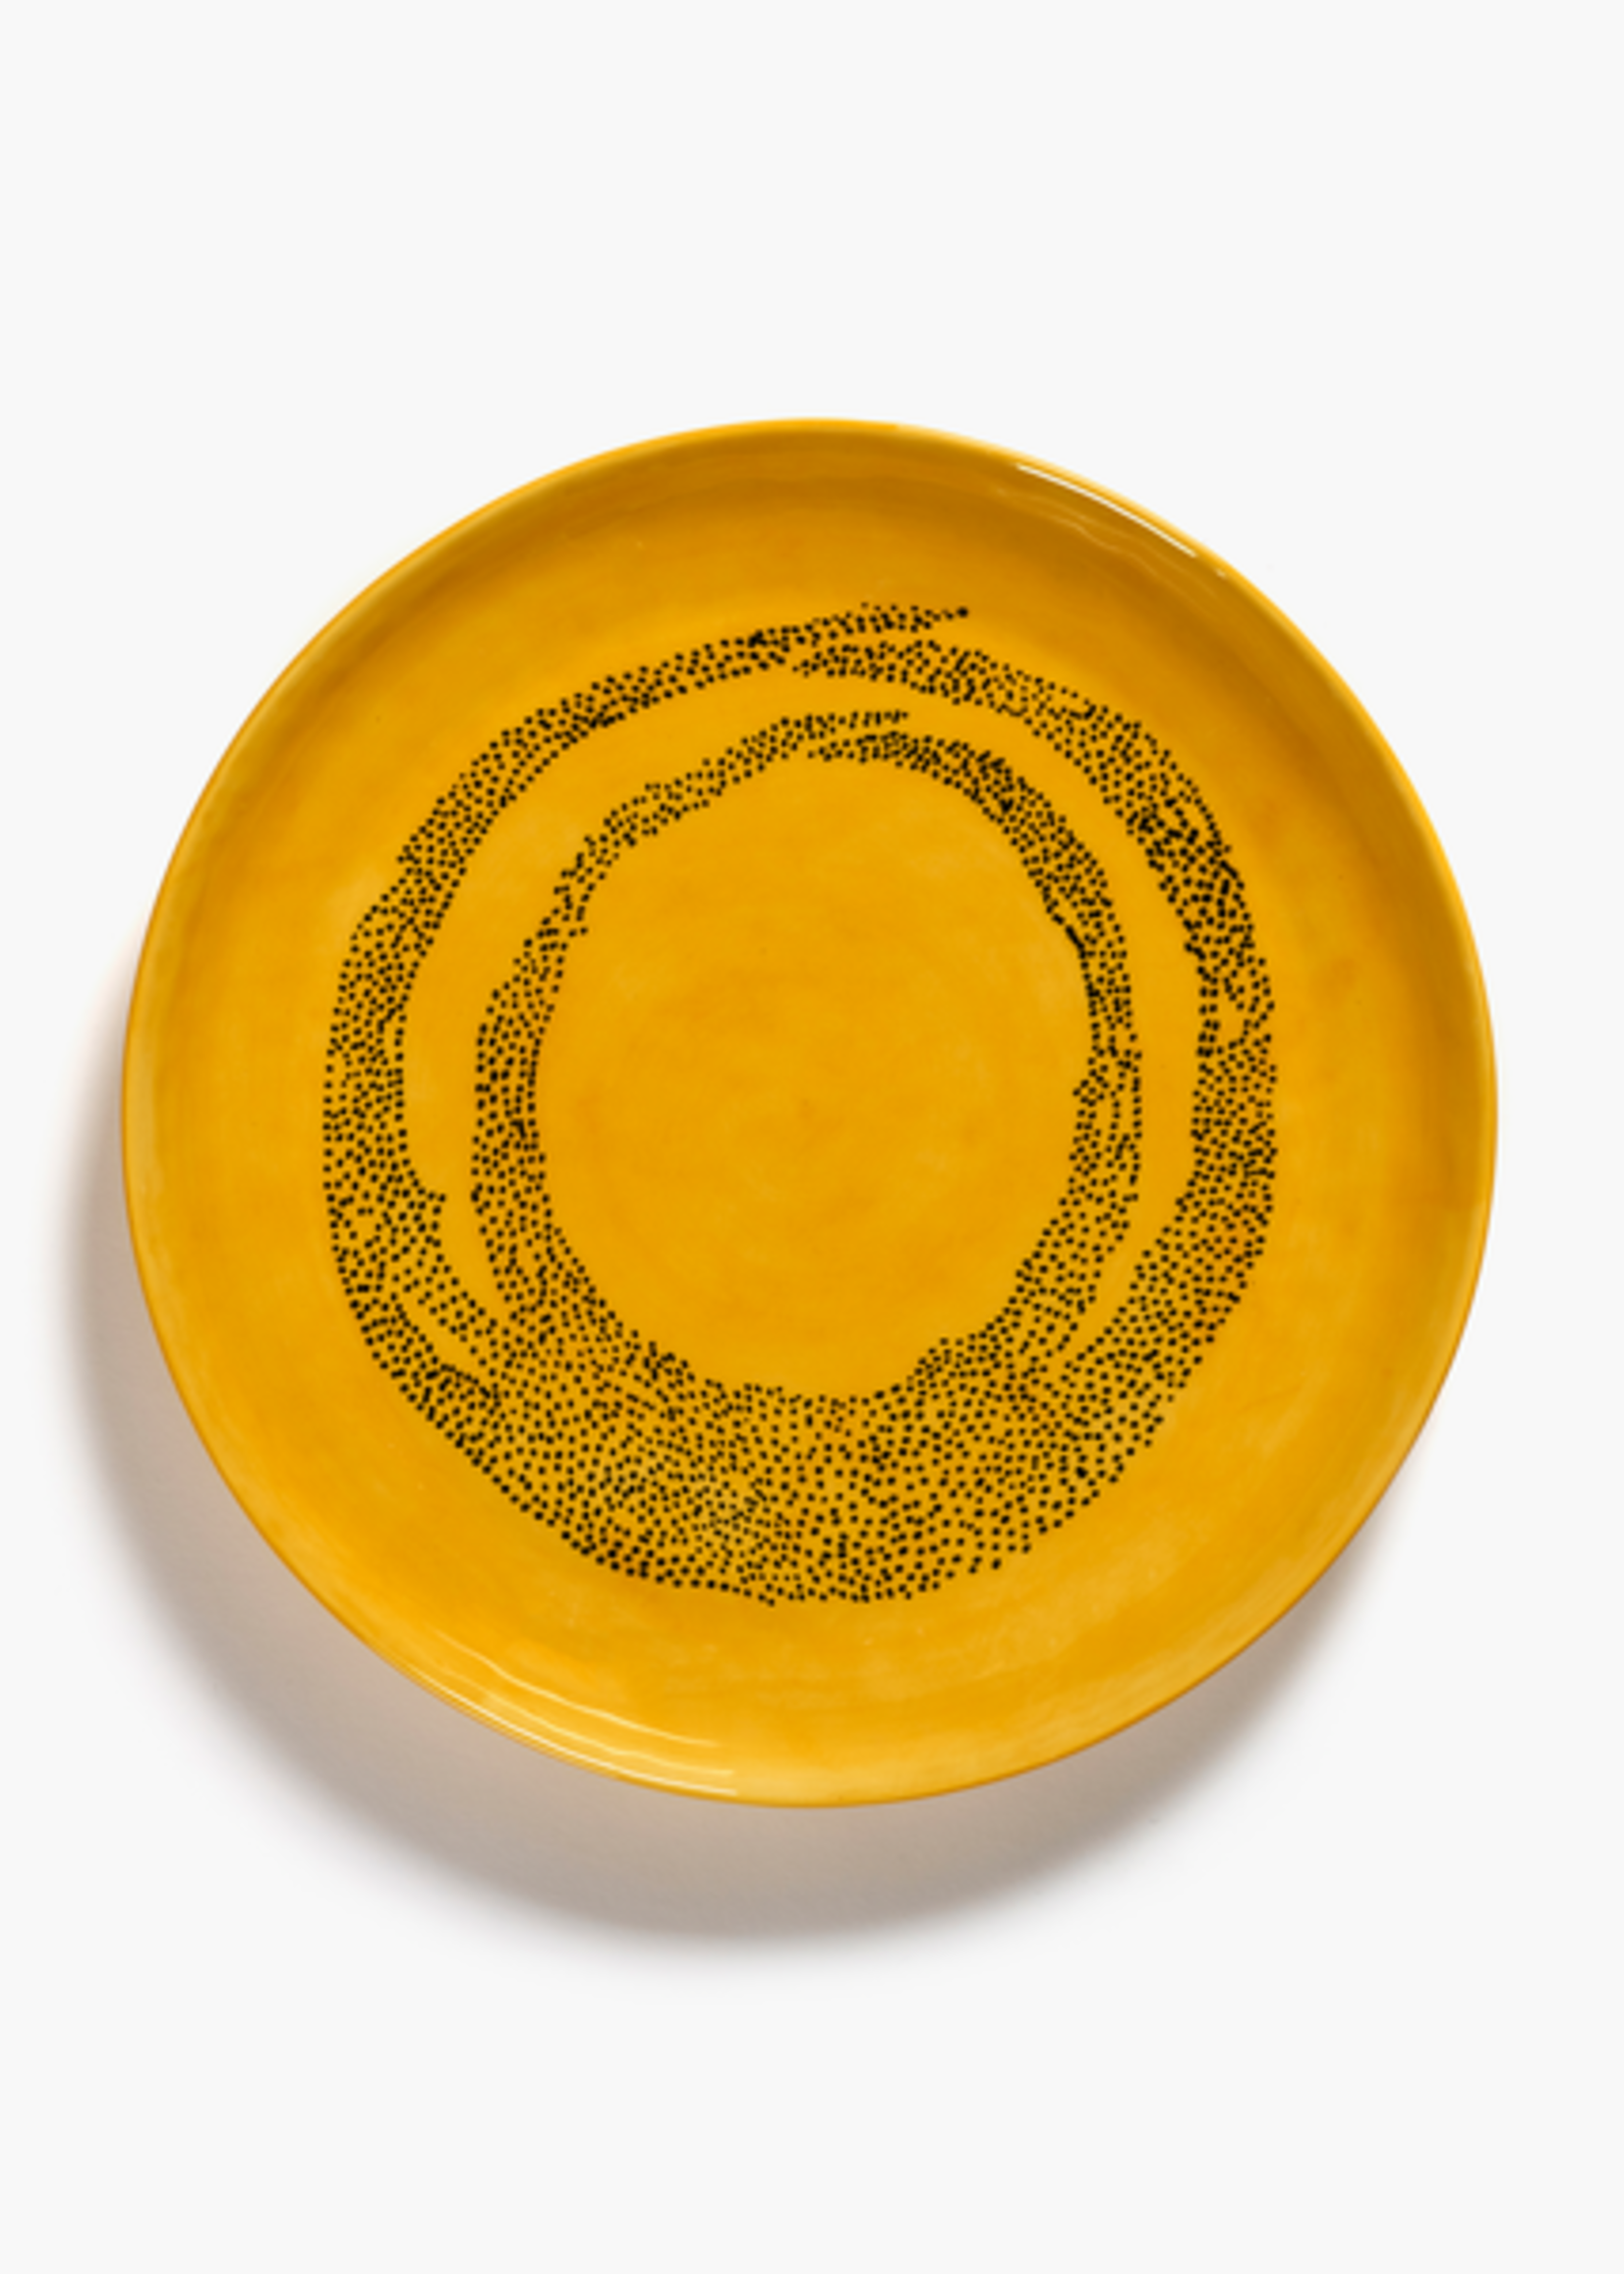 Serax Serax - Ottolenghi - Feast - Plat de service - 35cm - S - jaune noir points